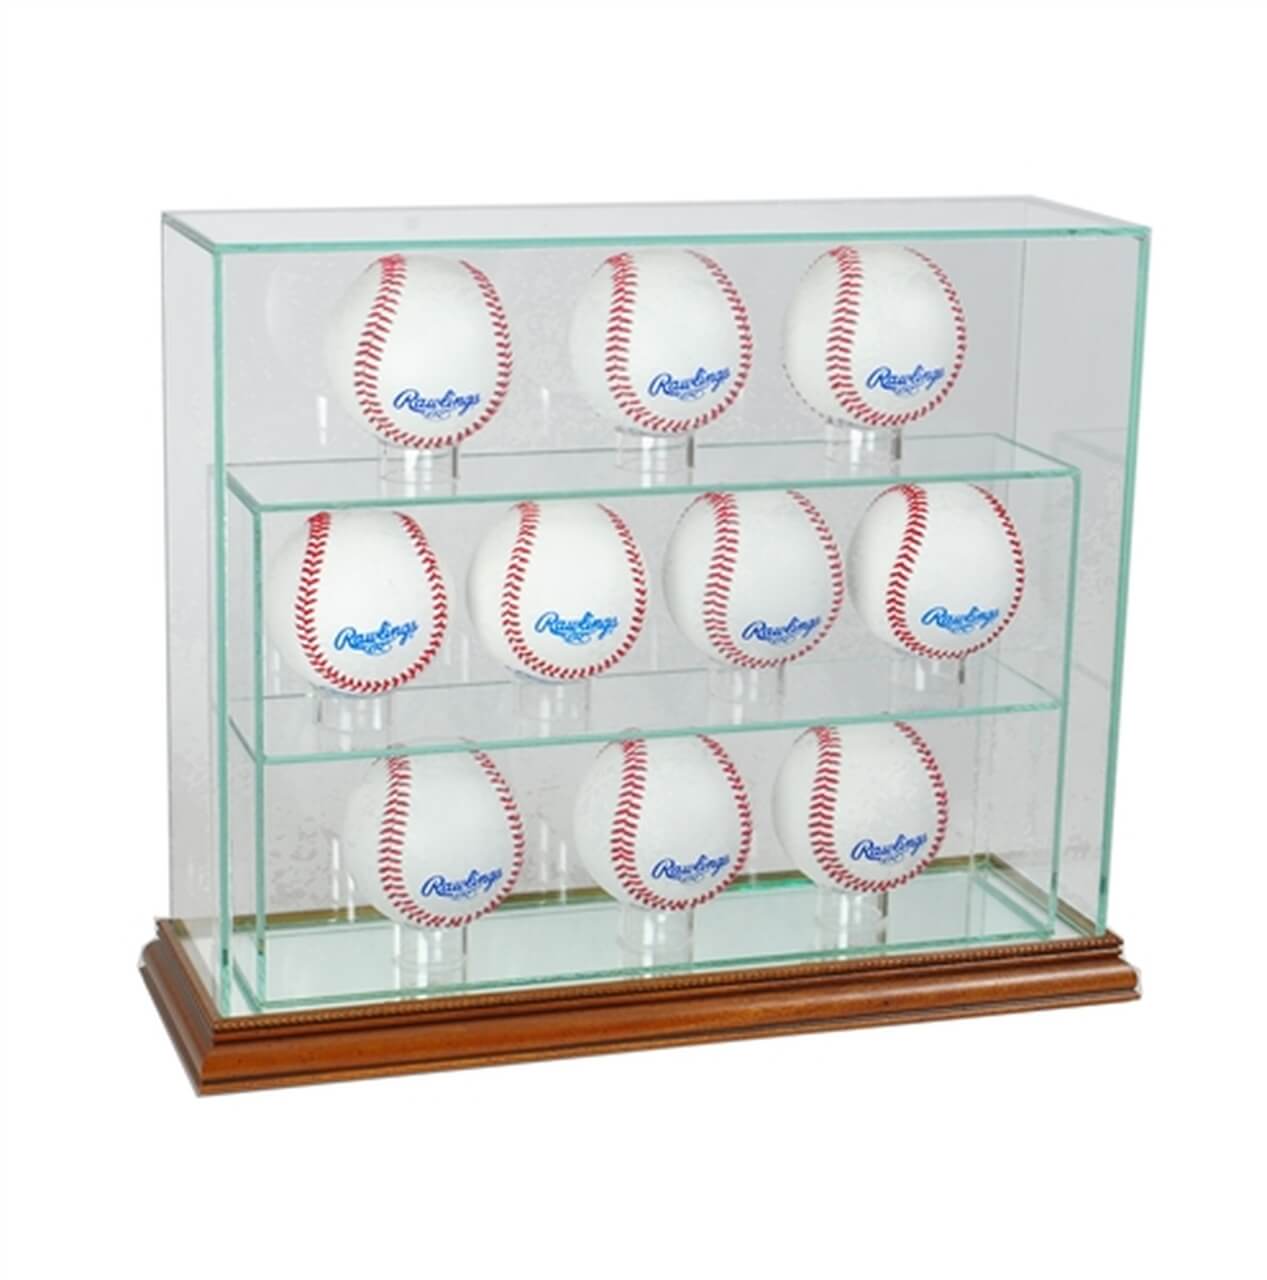  New York Yankees Black Framed Logo Jersey Display Case - Baseball  Jersey Logo Display Cases : Sports & Outdoors